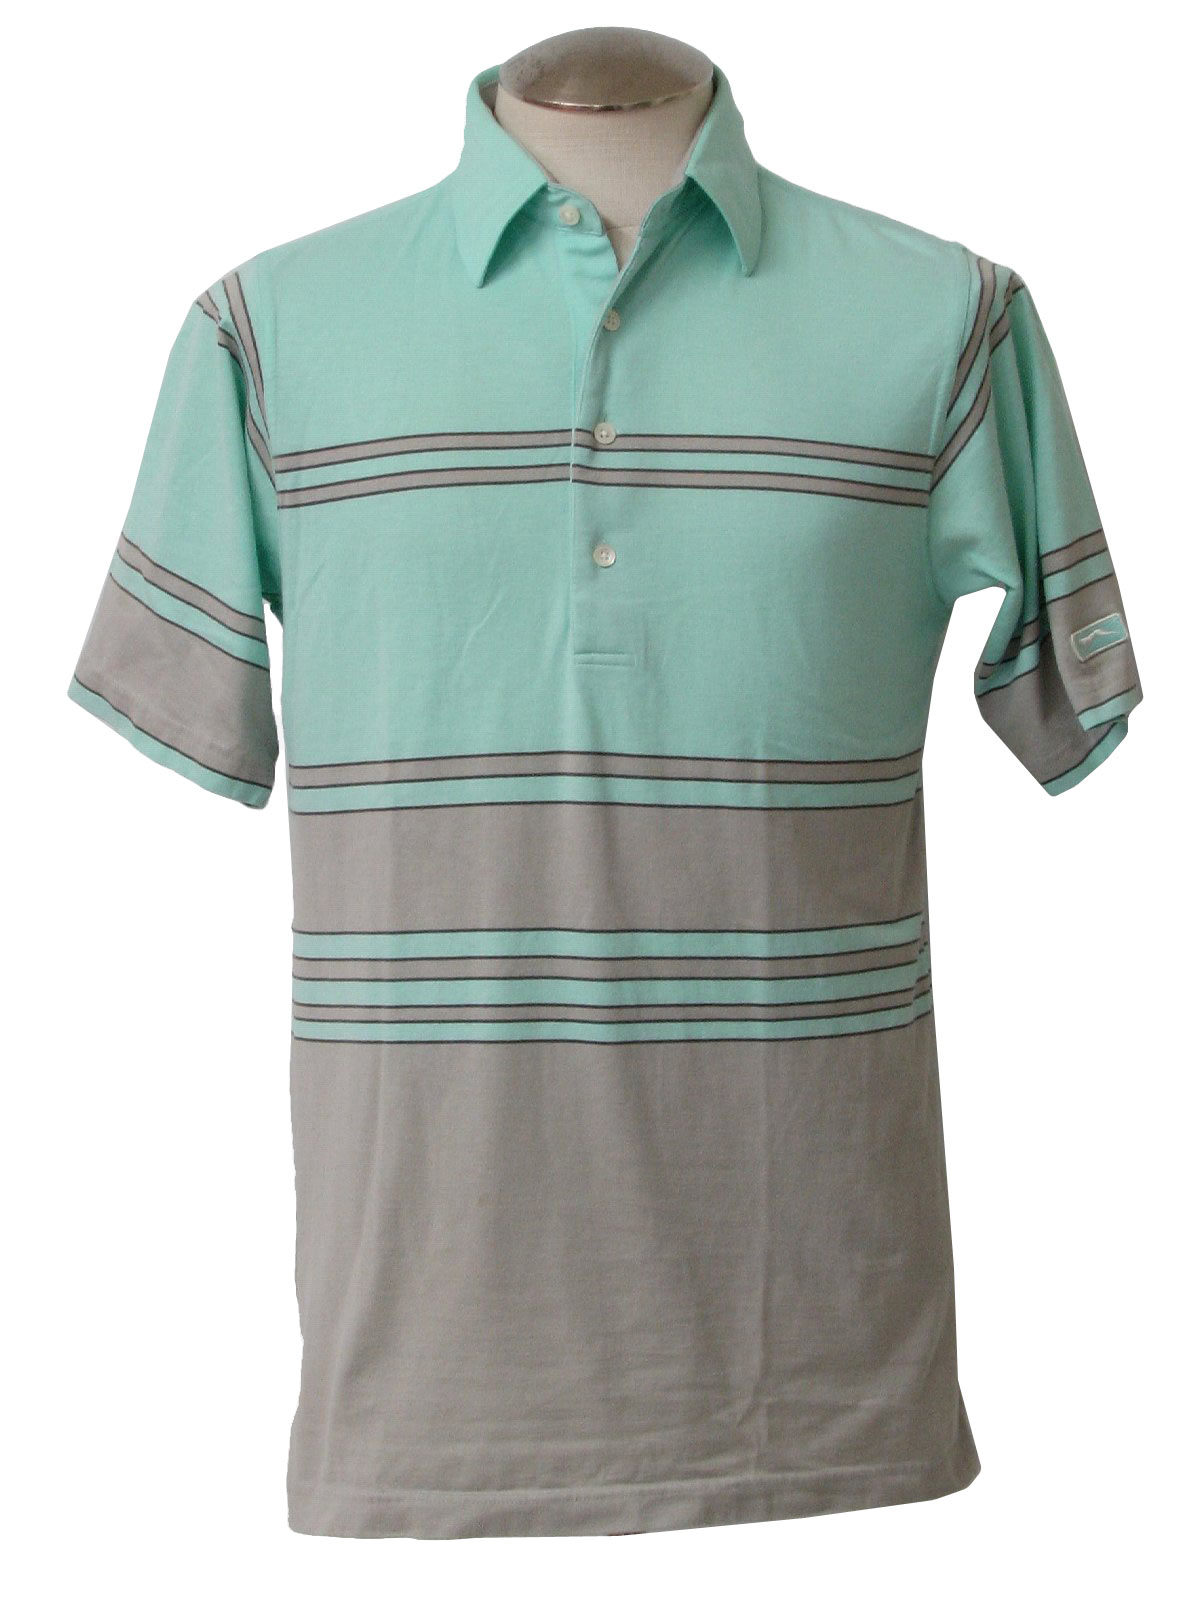 1980's Retro Shirt: 80s -Slazenger- Mens teal green and grey color ...